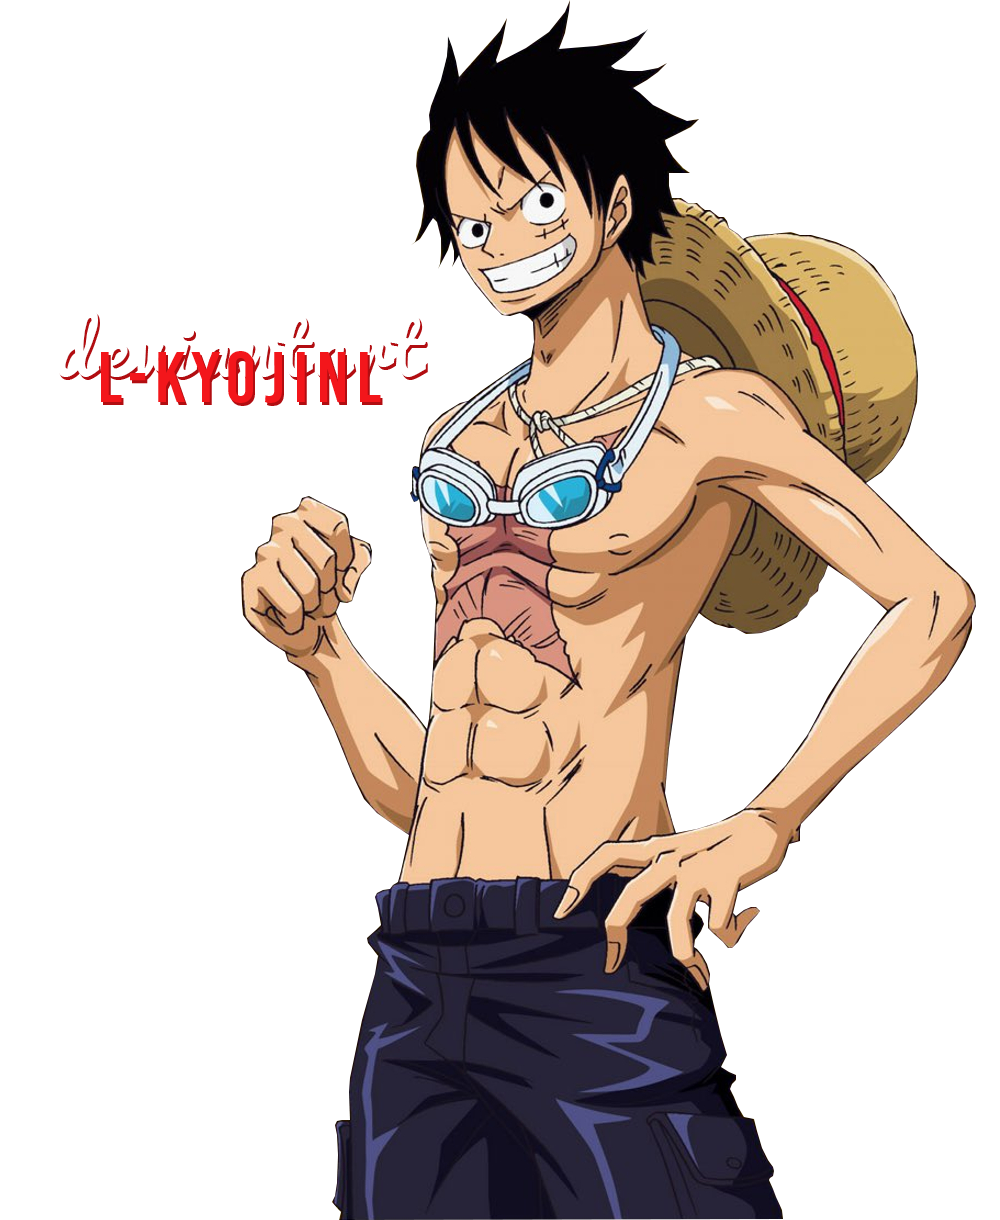 One Piece Monkey D. Luffy Render by AkenoSenpaiRenders on DeviantArt